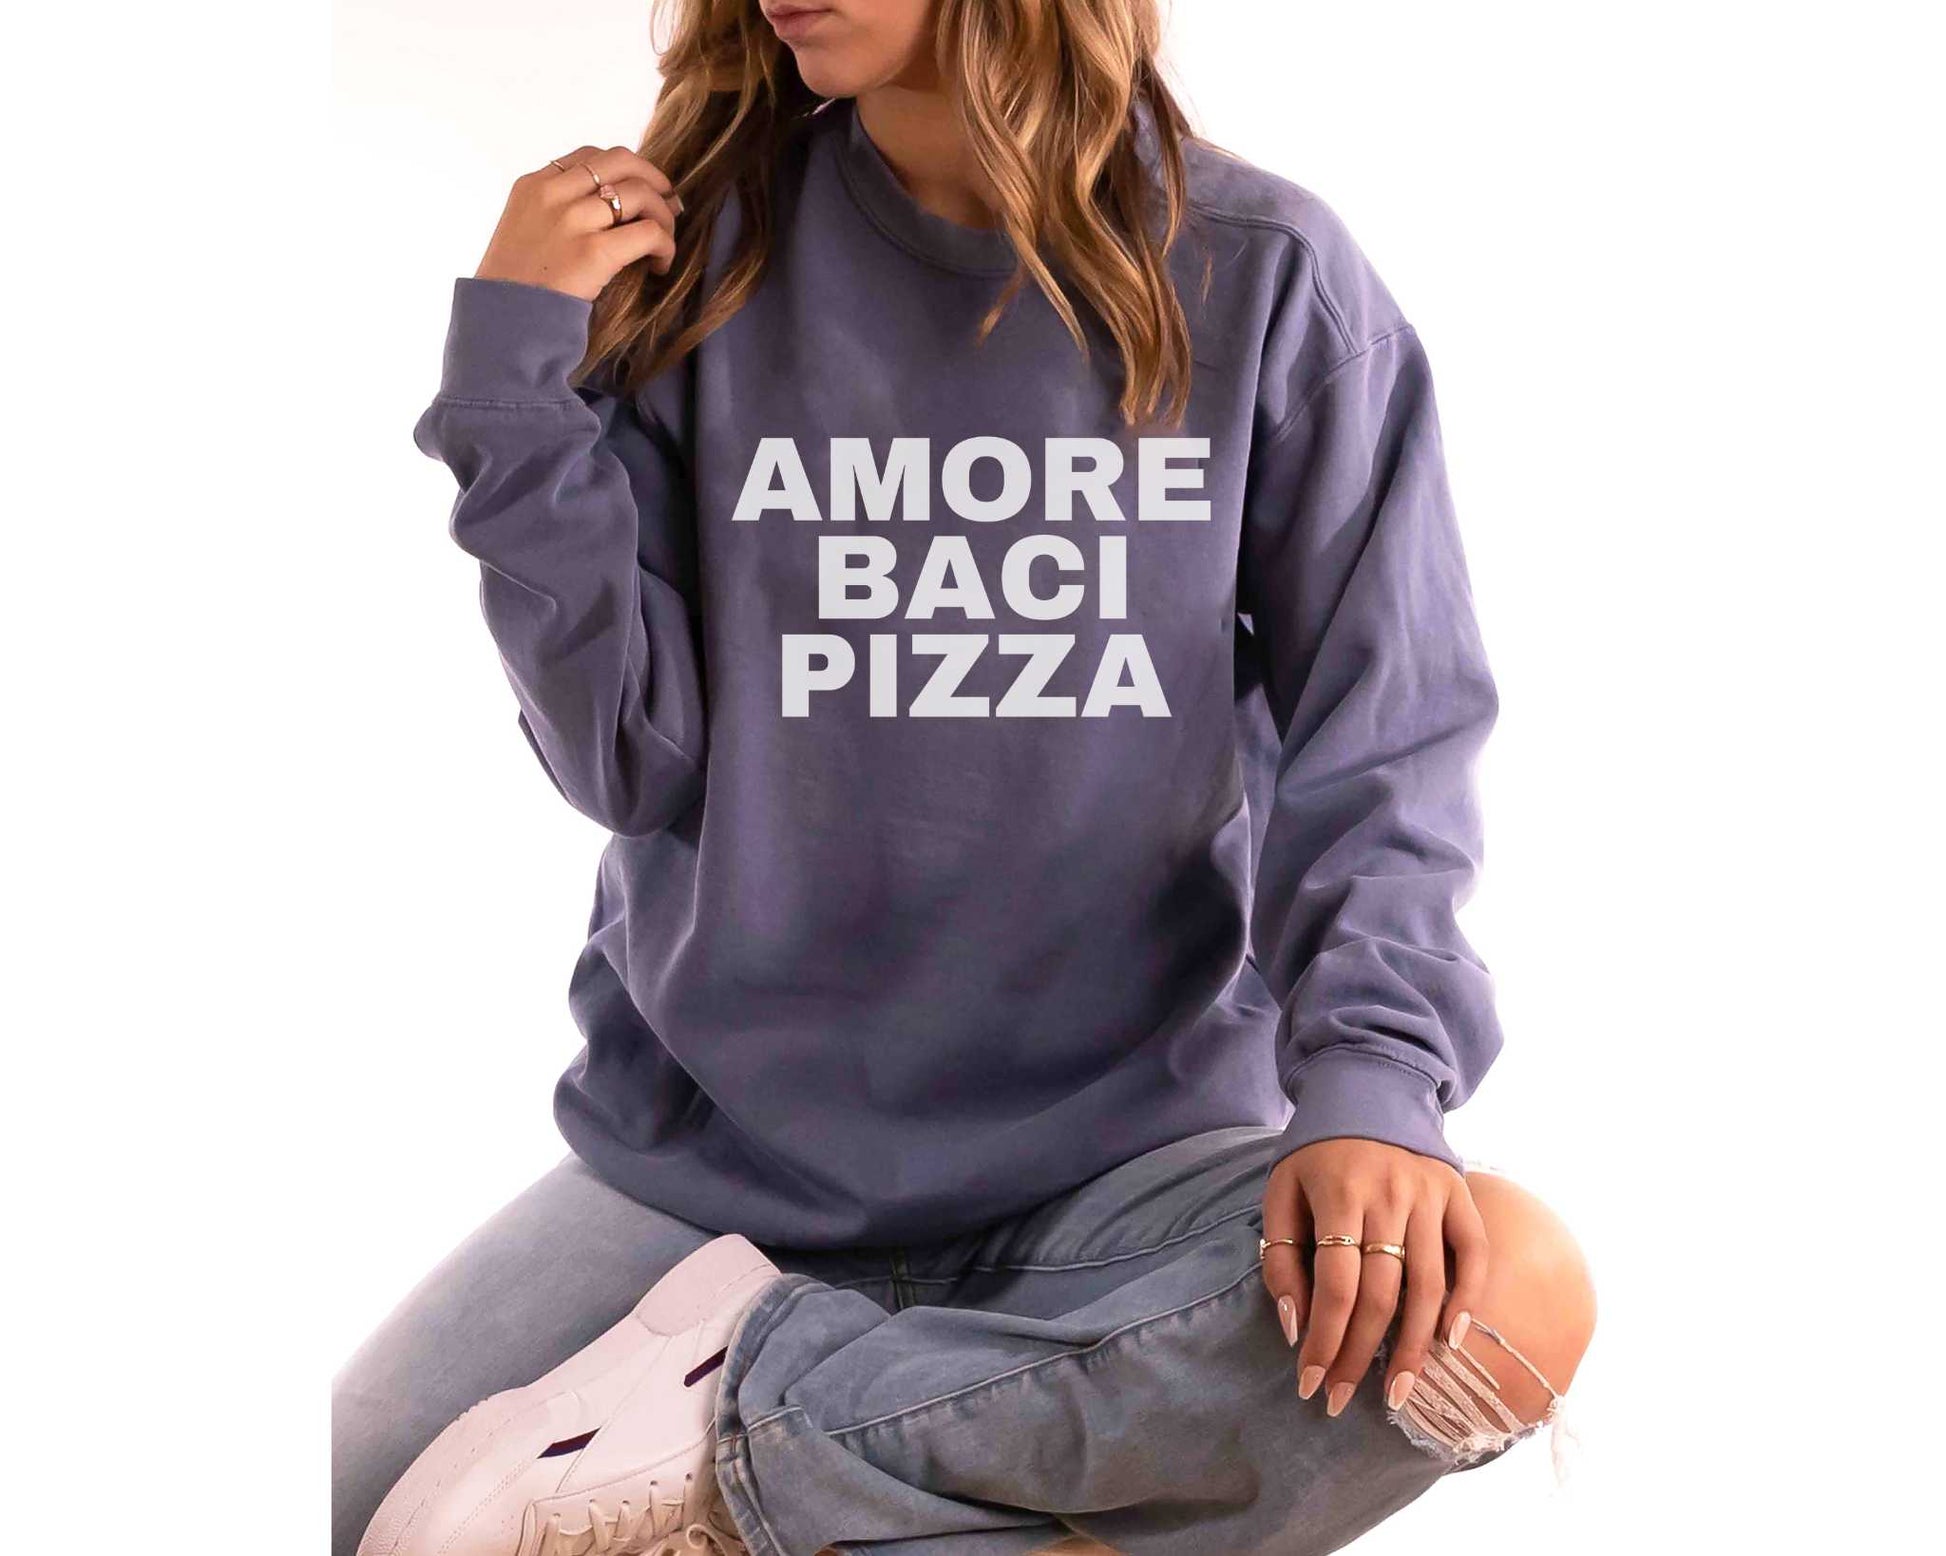 Amore Baci Pizza (Love Kisses Pizza) Sweatshirt in Blue Jean